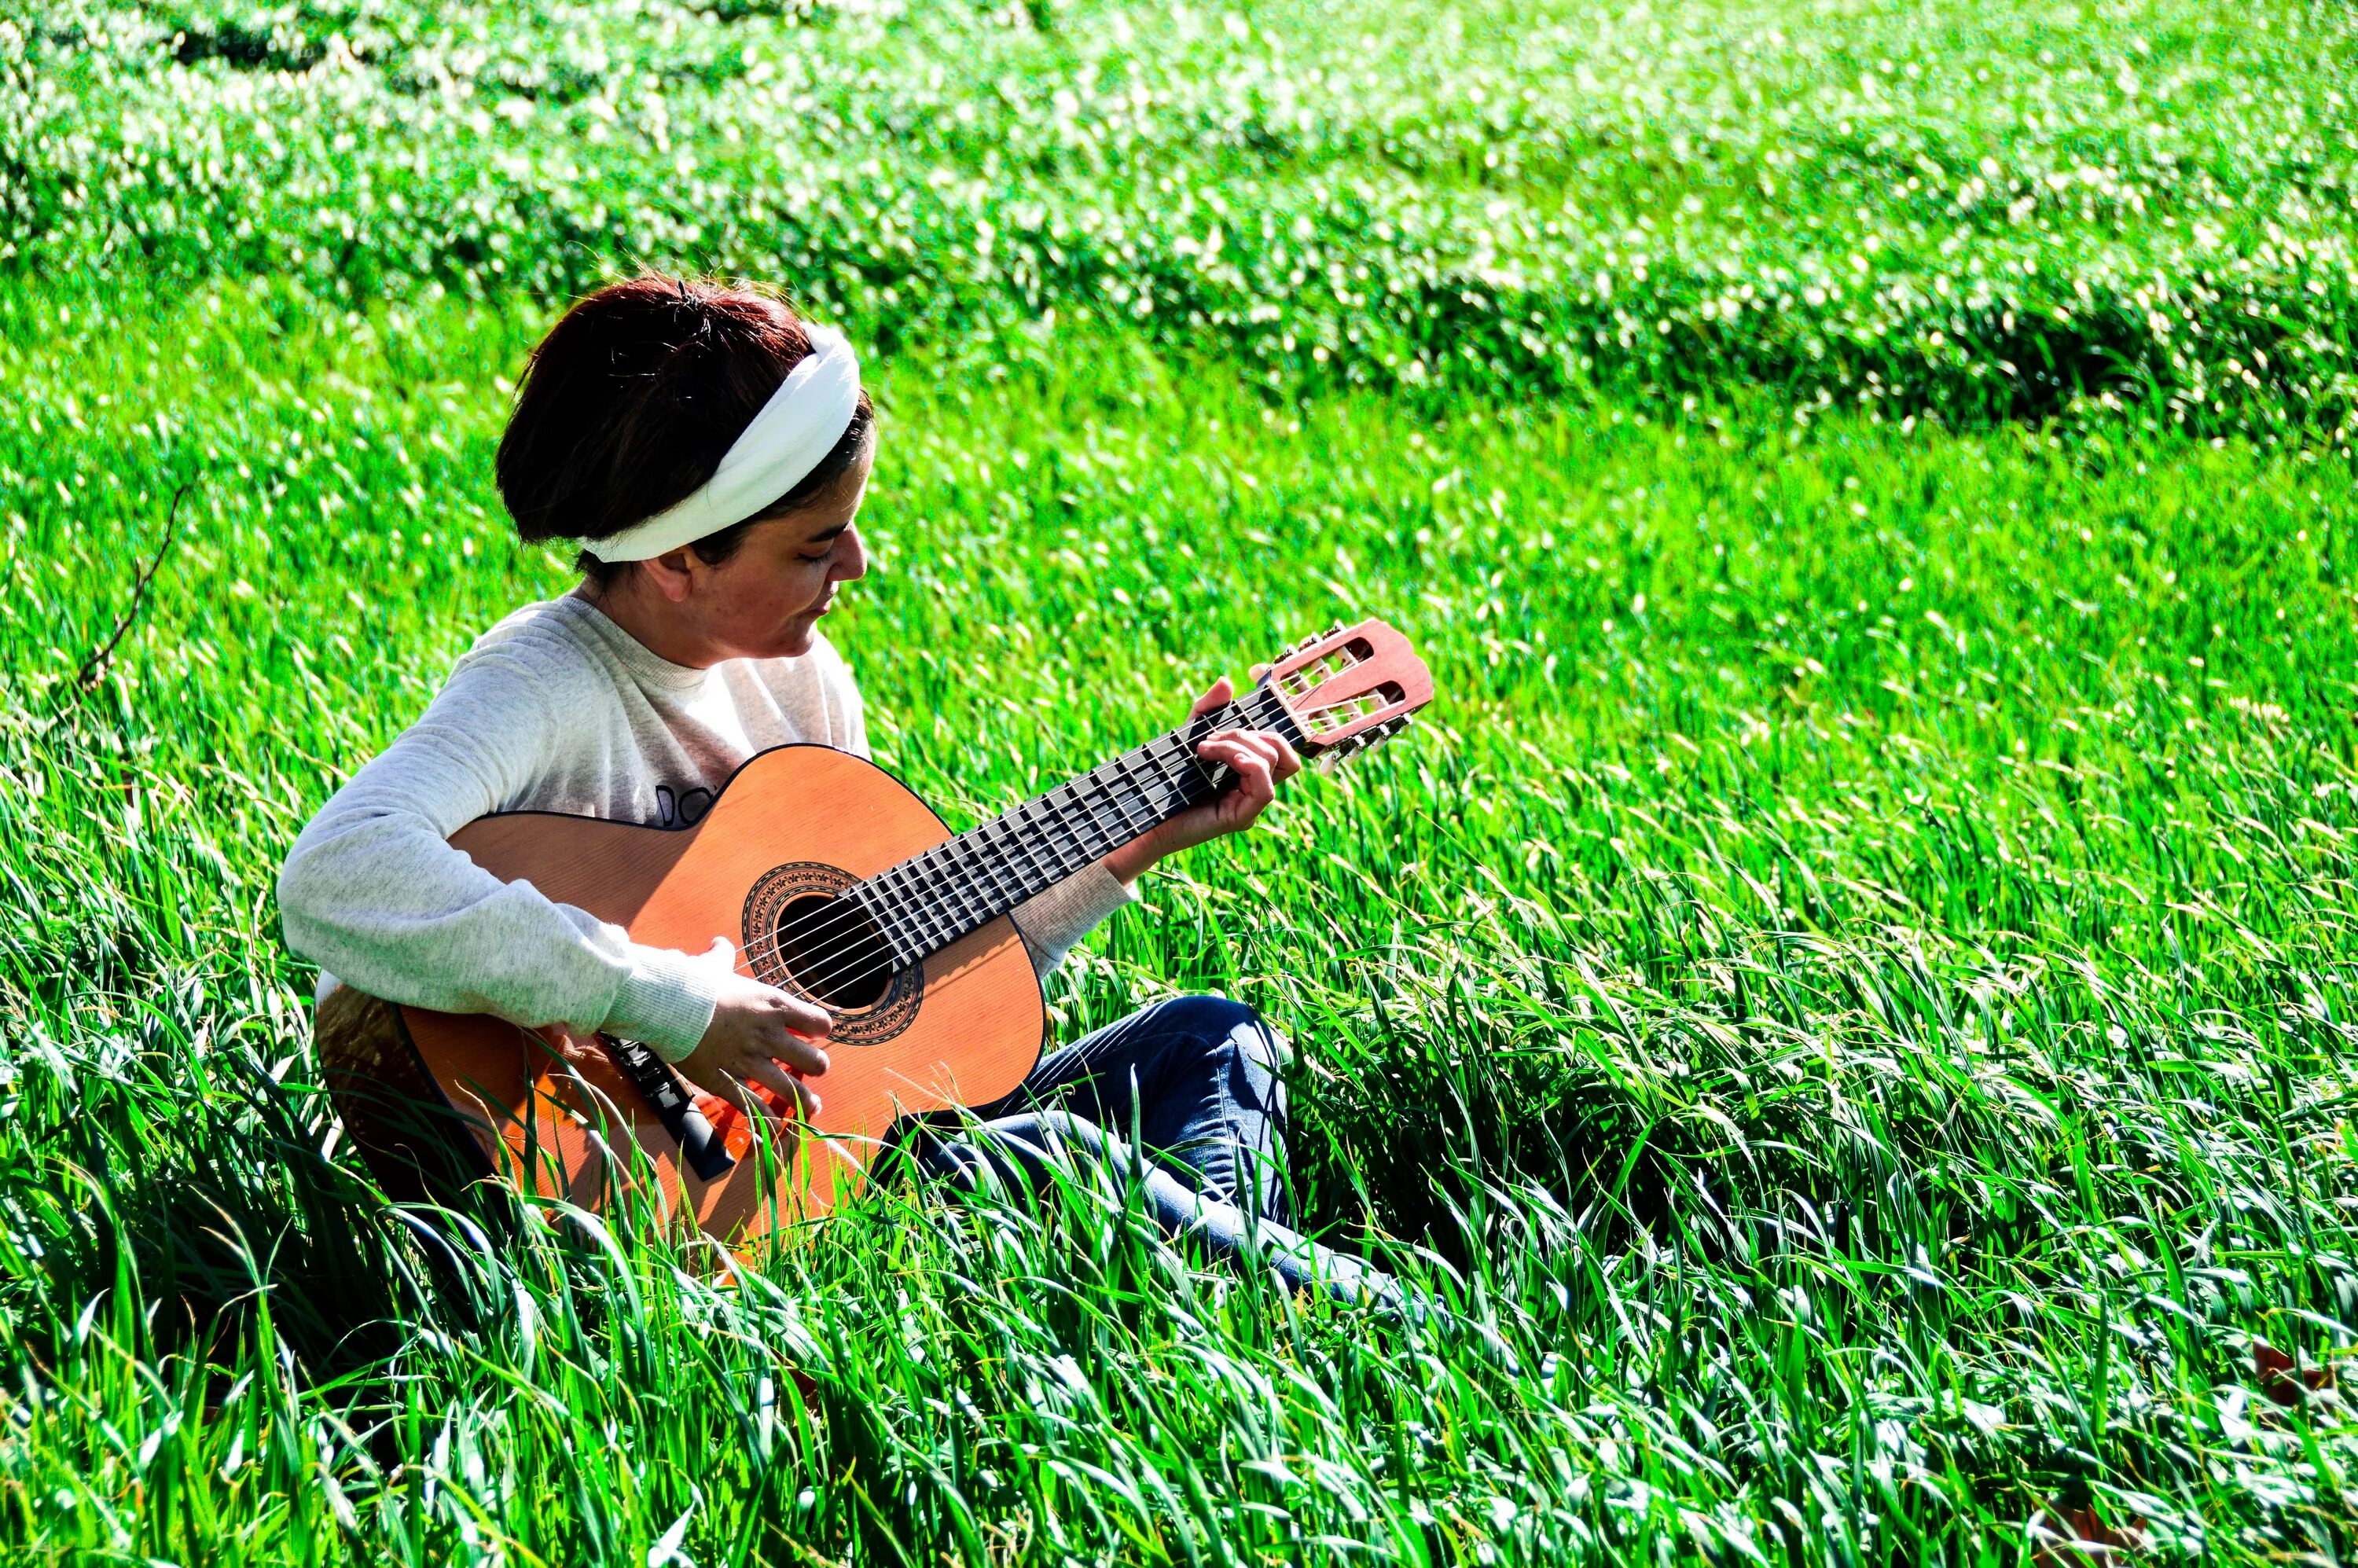 Фотосессия с гитарой на природе. Девочка с гитарой. Девушка с гитарой на траве. Гитара на природе. Как играть на гитаре в траве